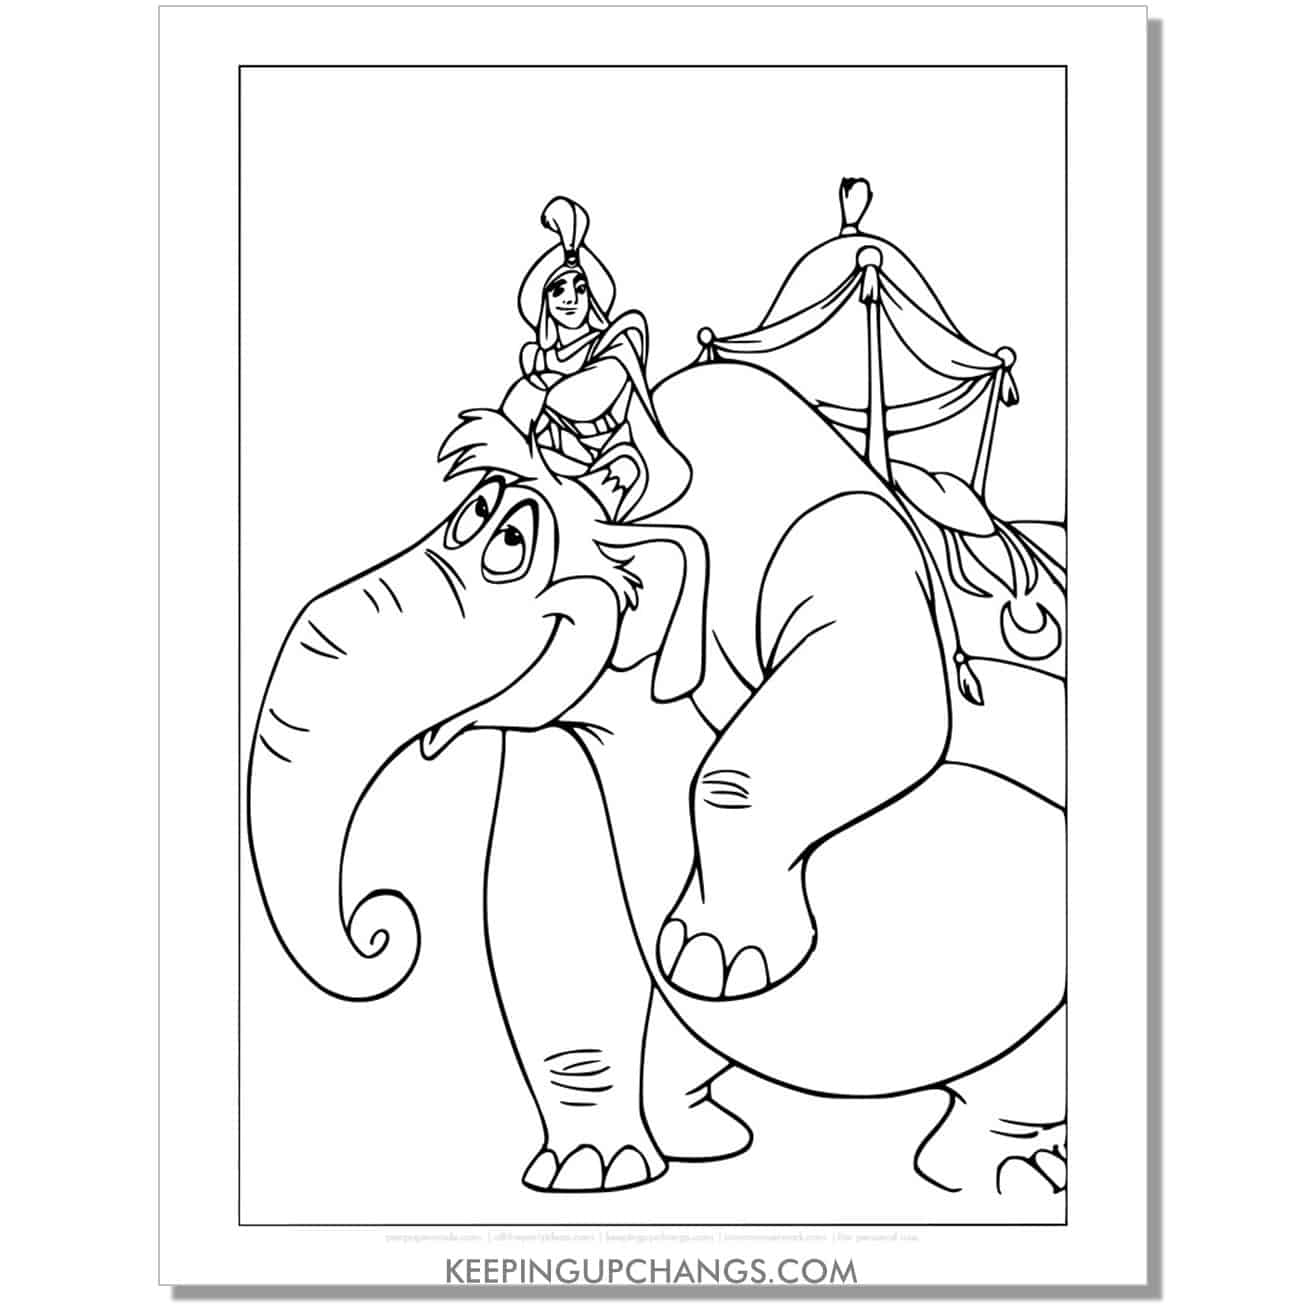 aladdin as prince ali arrives on elephant coloring page, sheet.